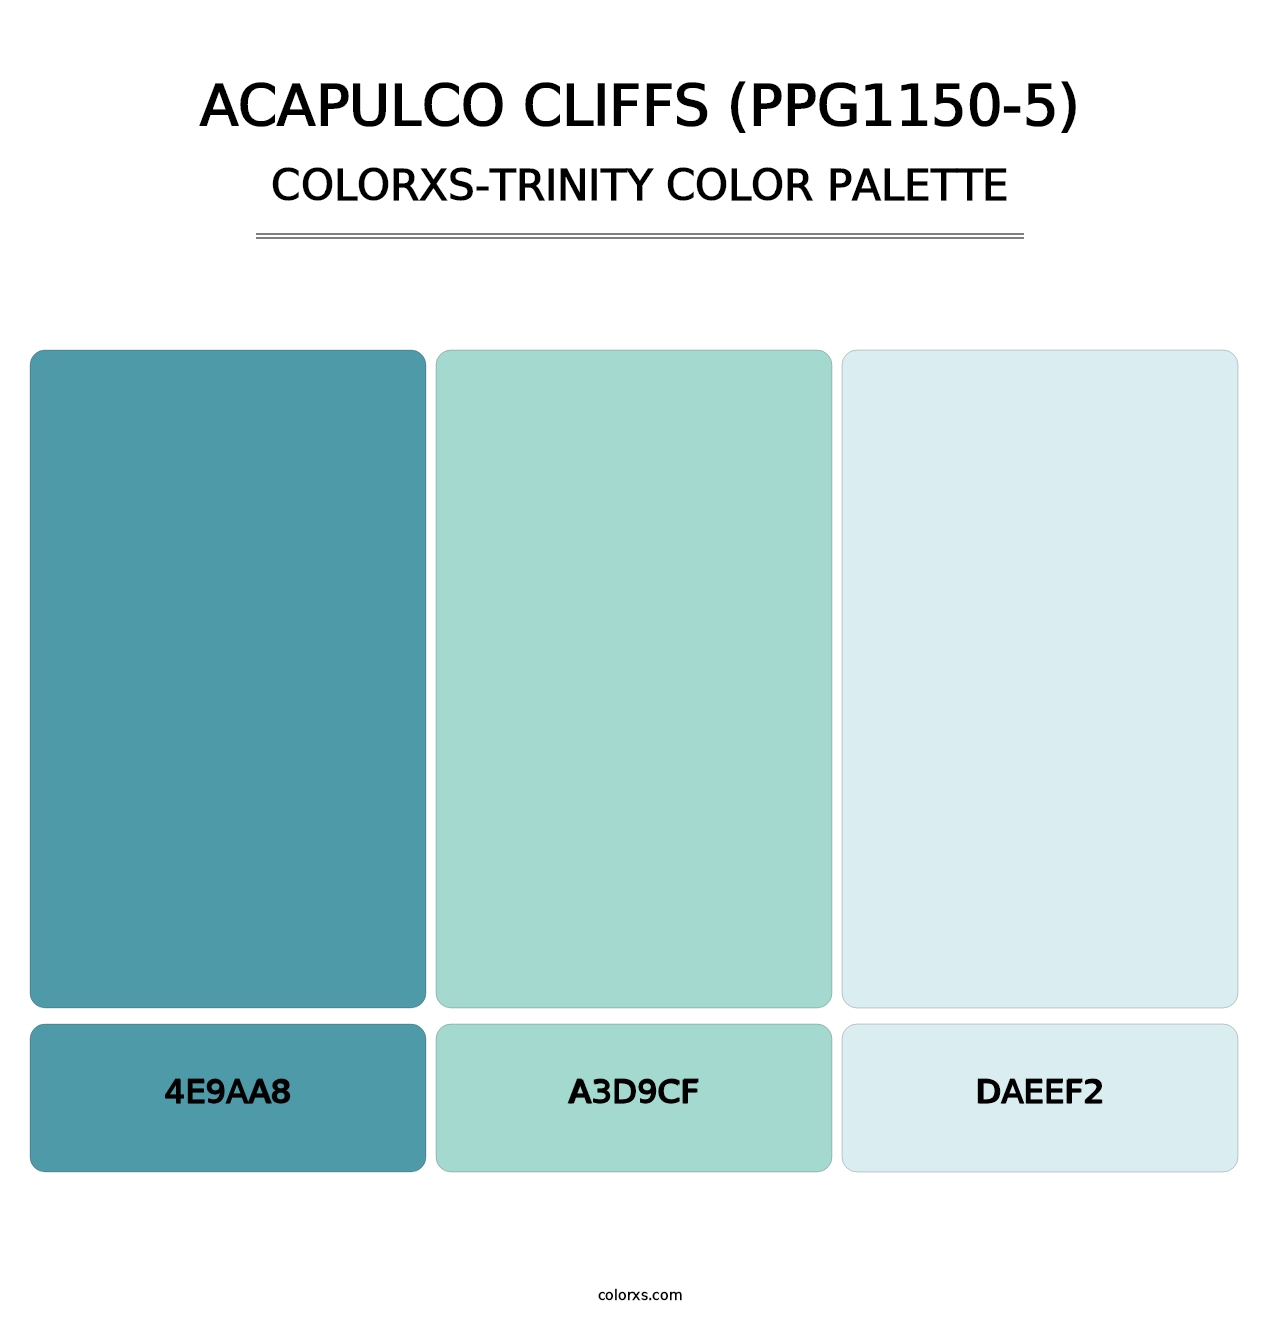 Acapulco Cliffs (PPG1150-5) - Colorxs Trinity Palette